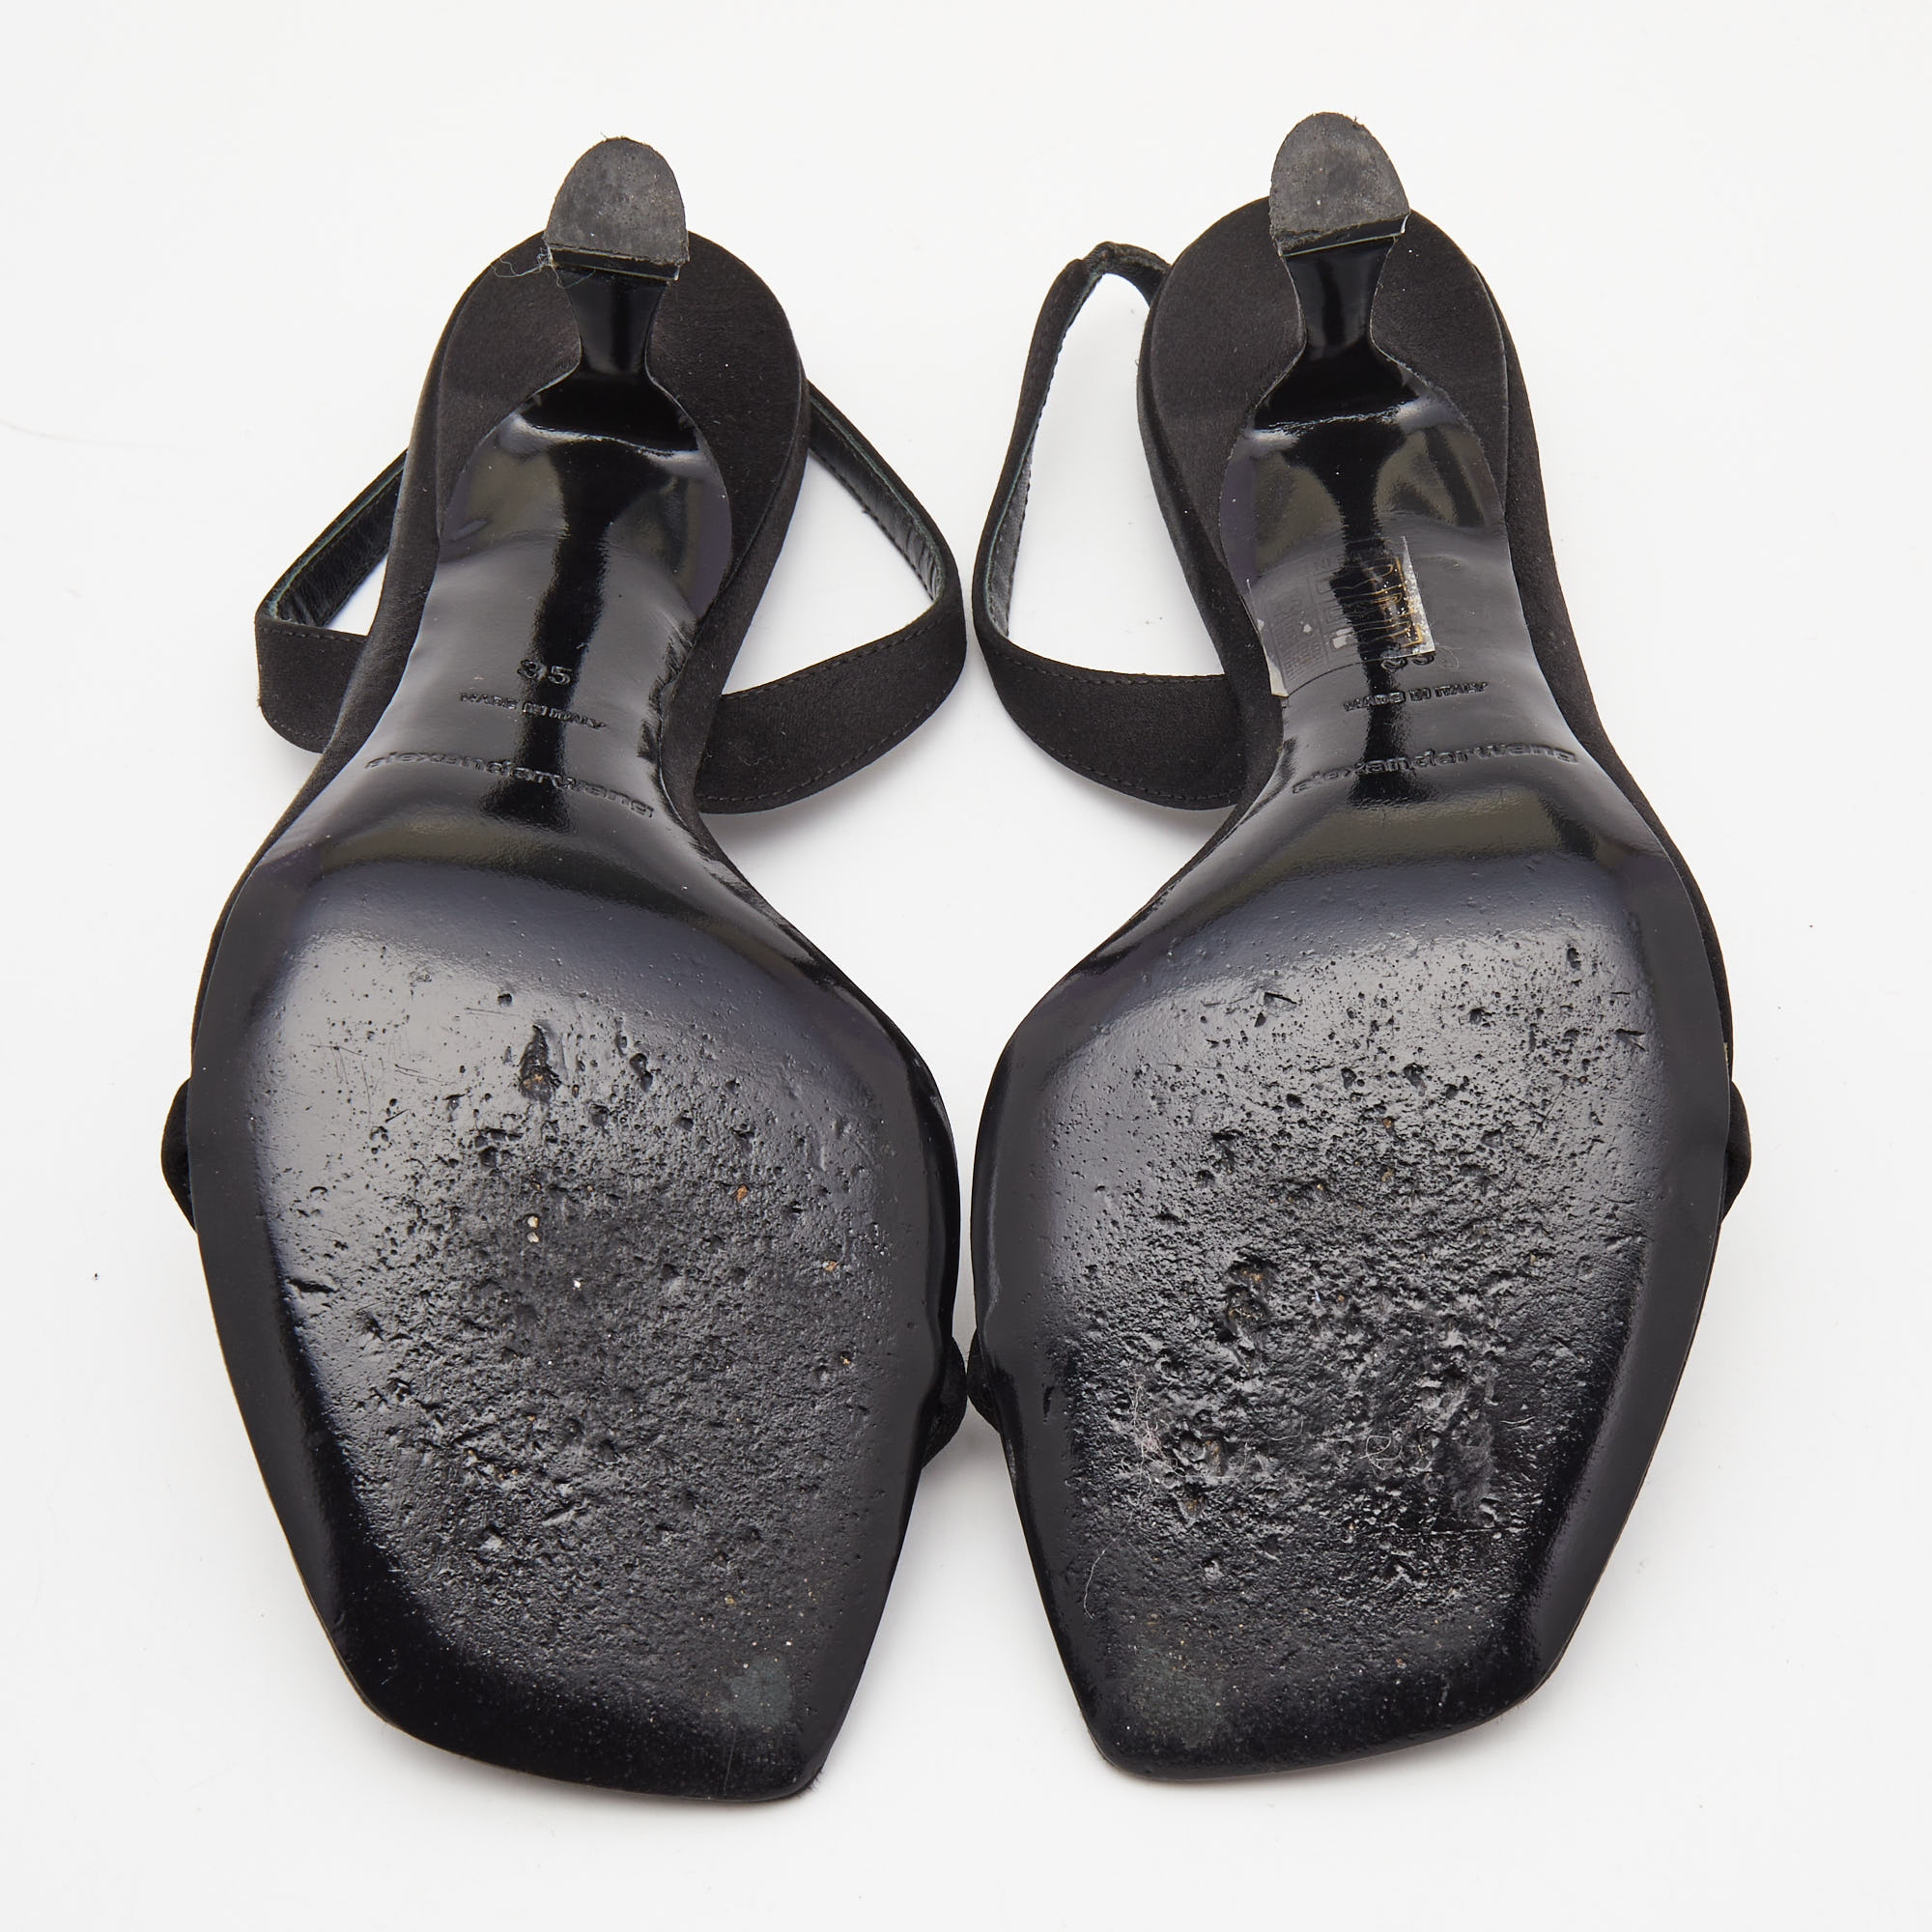 Alexander Wang Black Satin Ivy Slingback Sandals Size 35